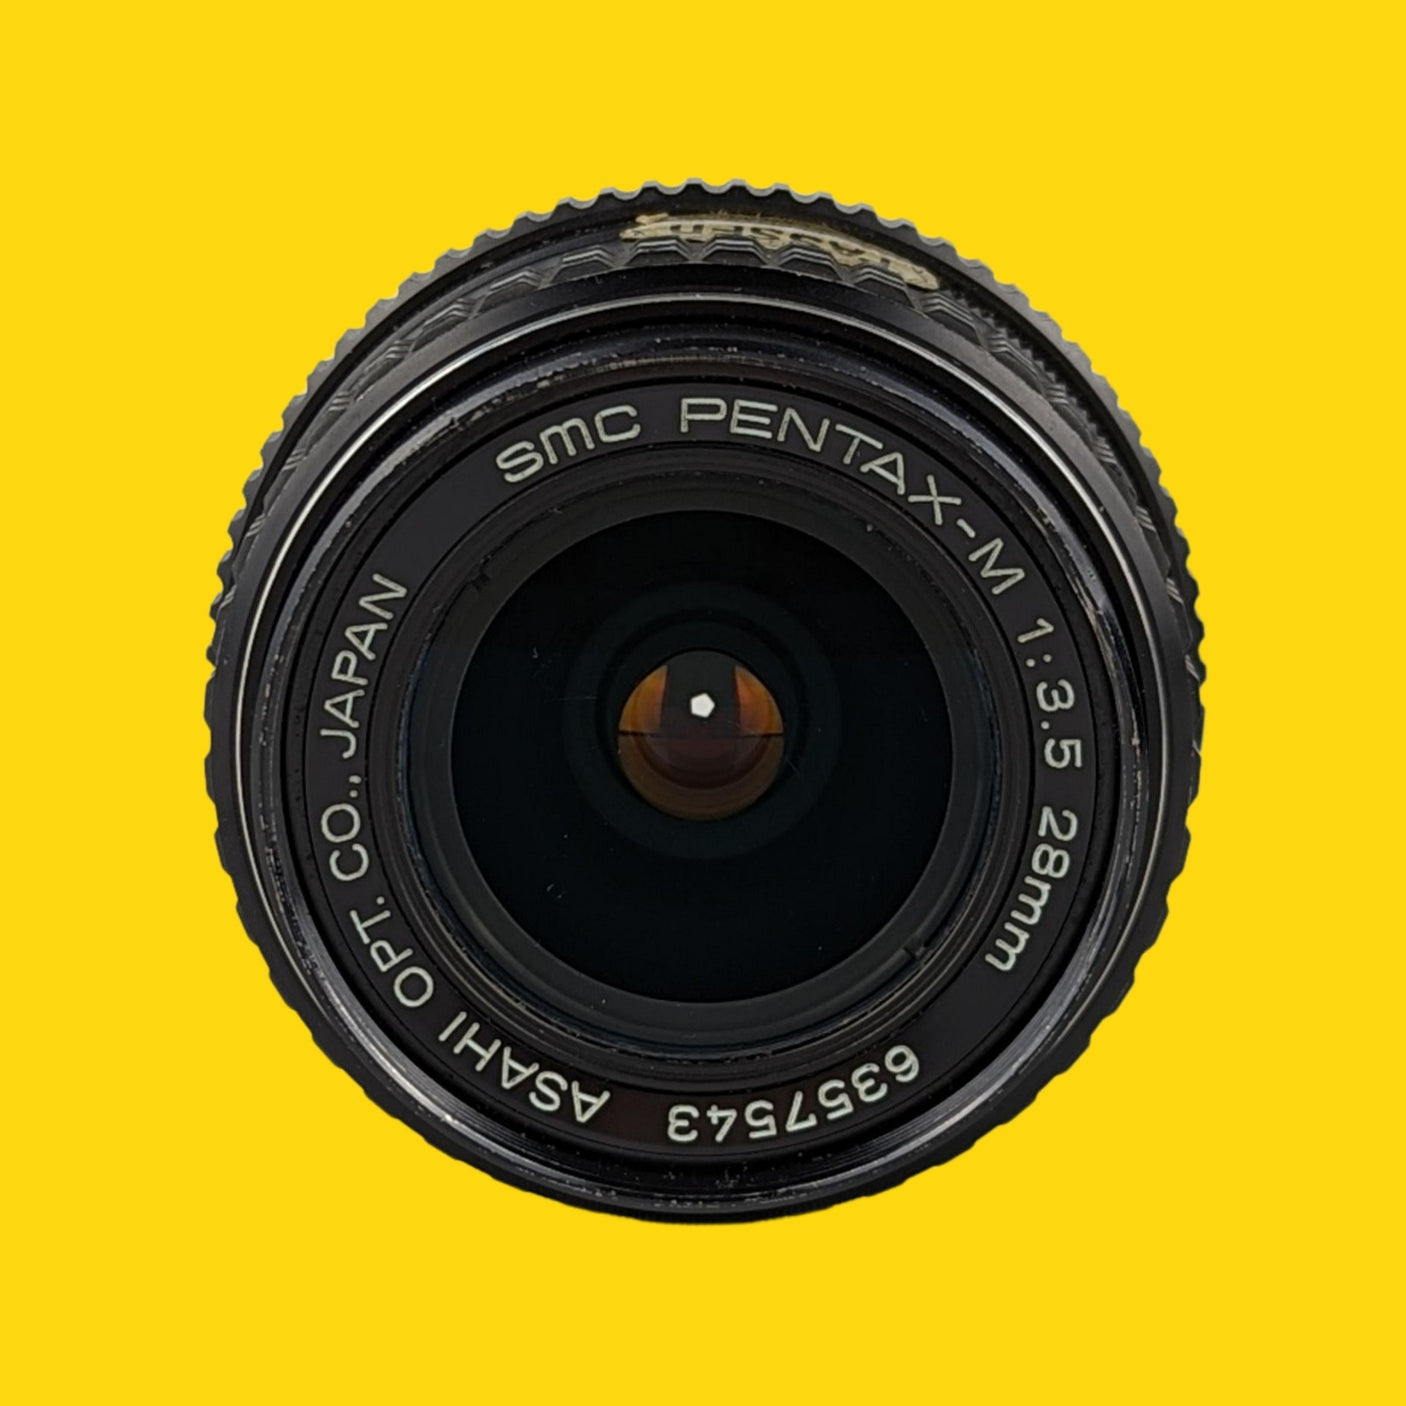 Pentax-M SMC 28mm f/2.8 Camera Lens